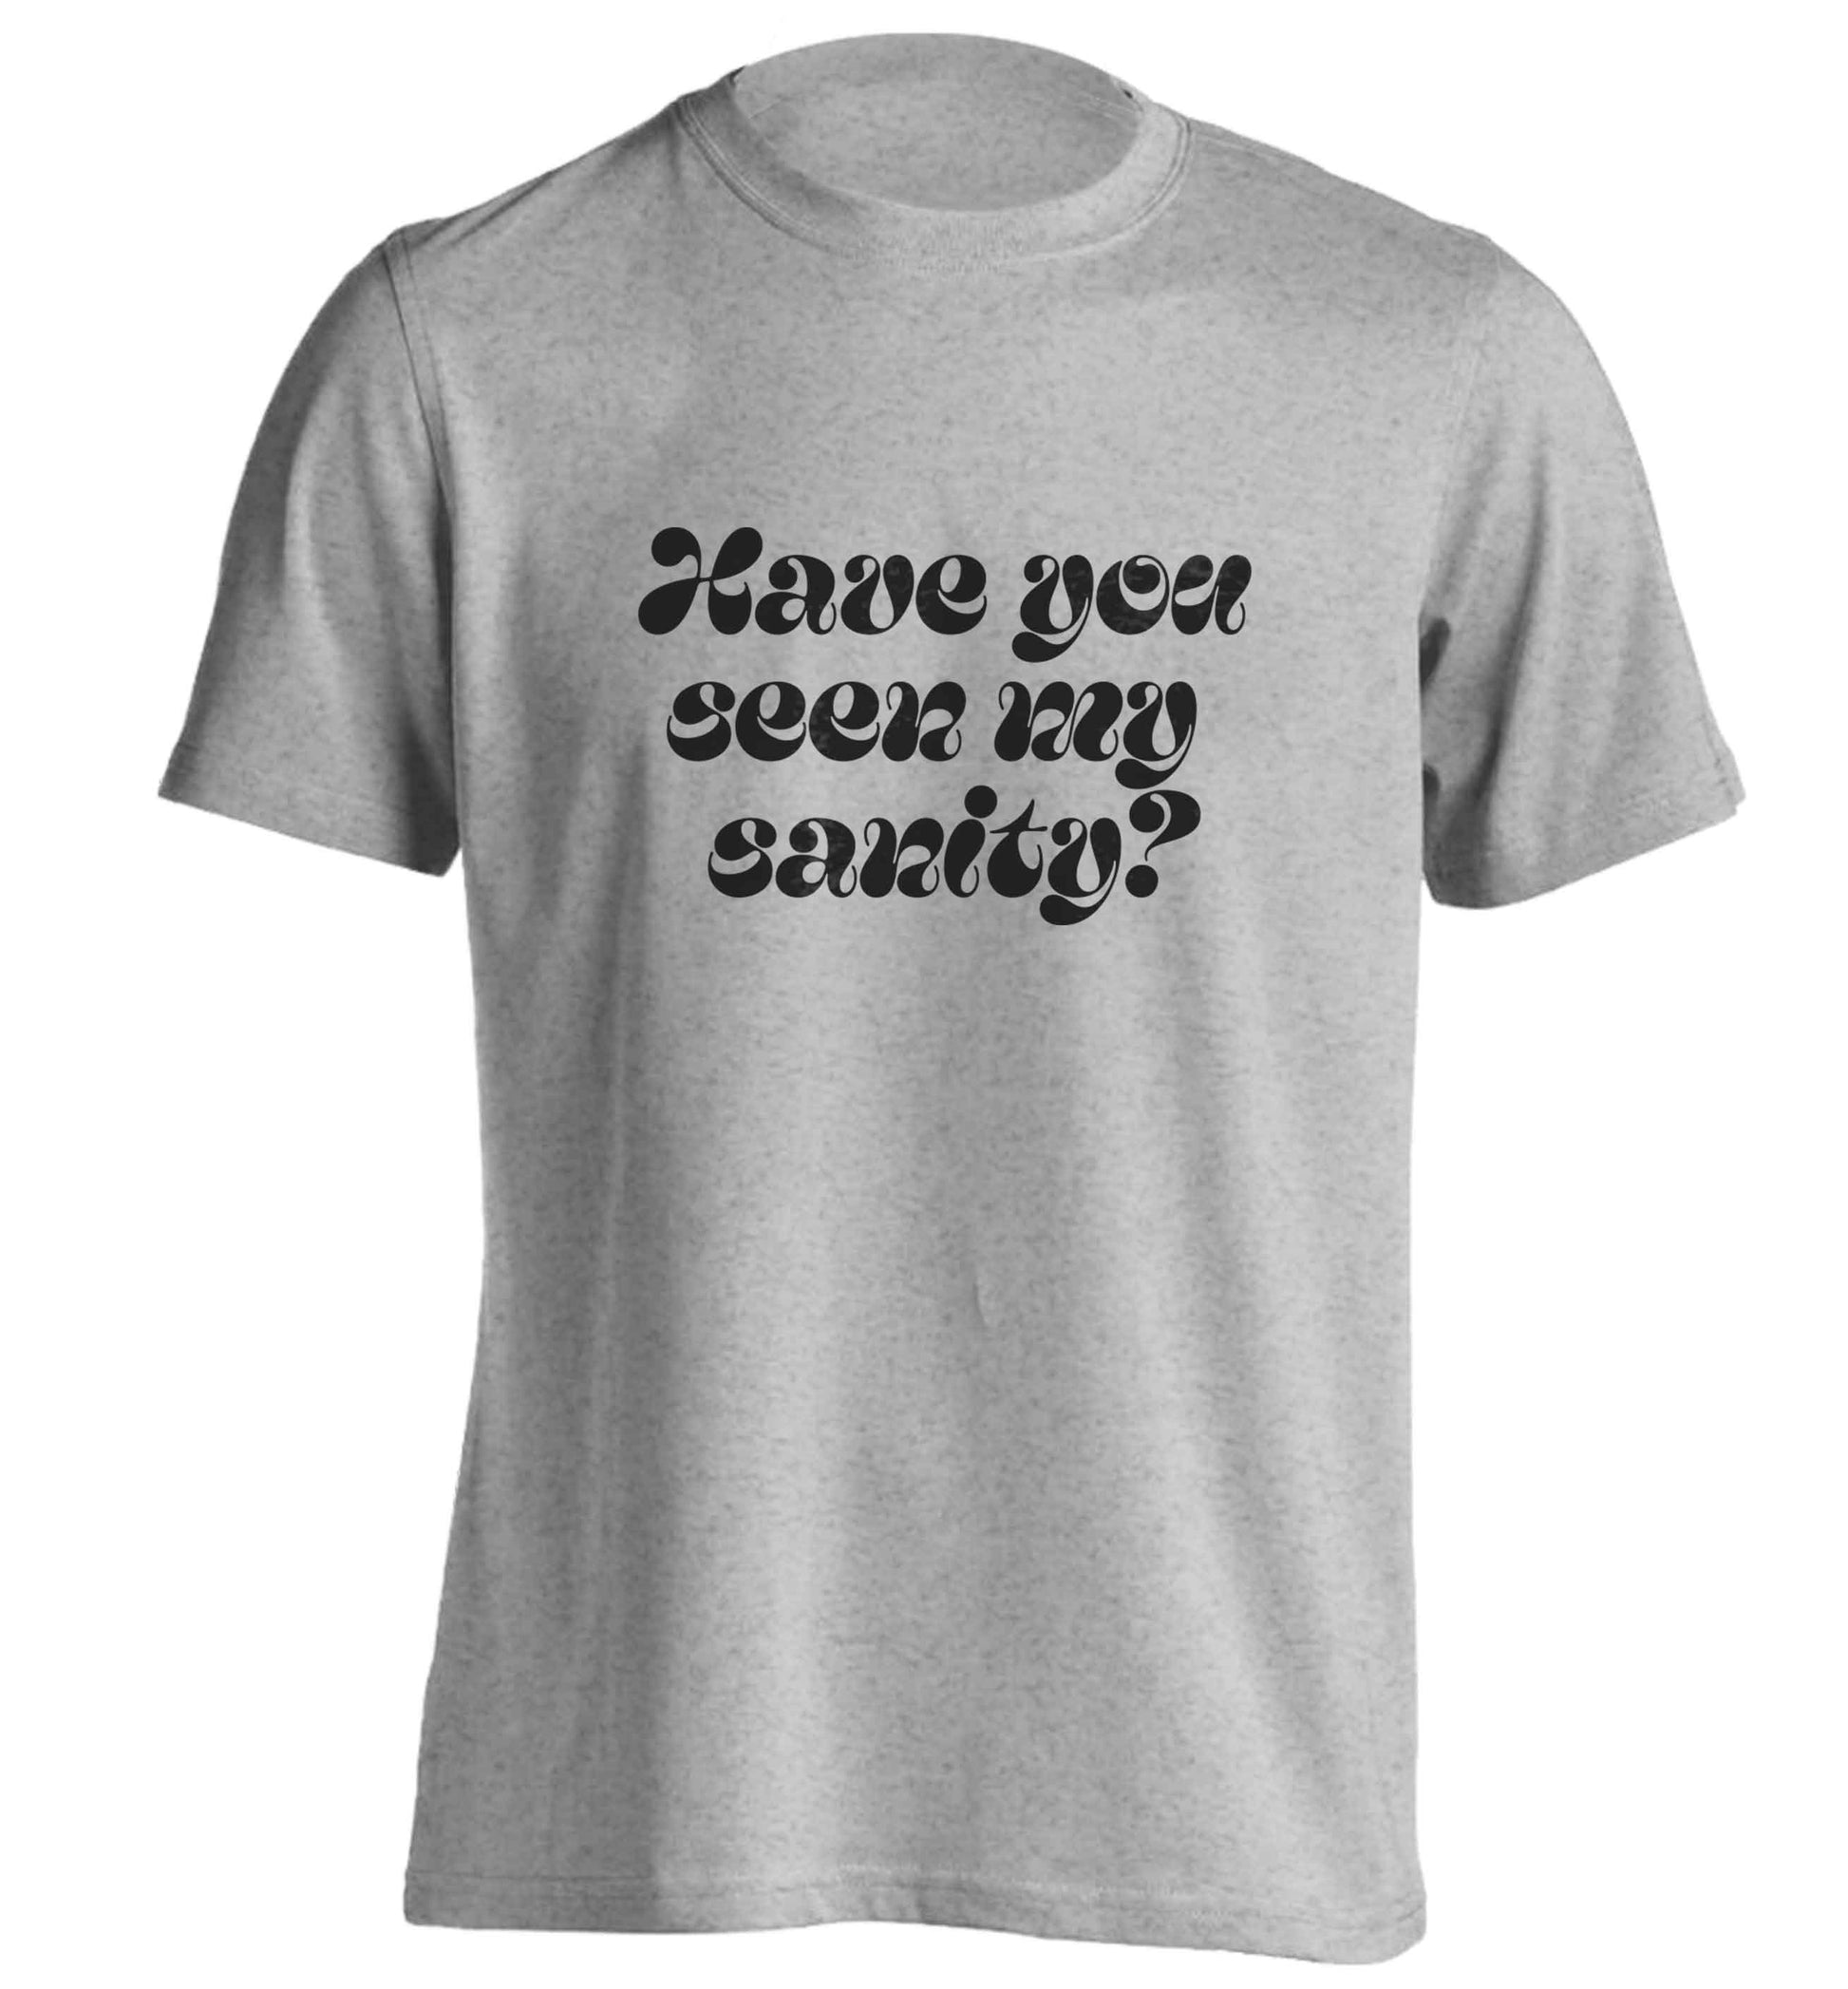 Have you seen my sanity? adults unisex grey Tshirt 2XL